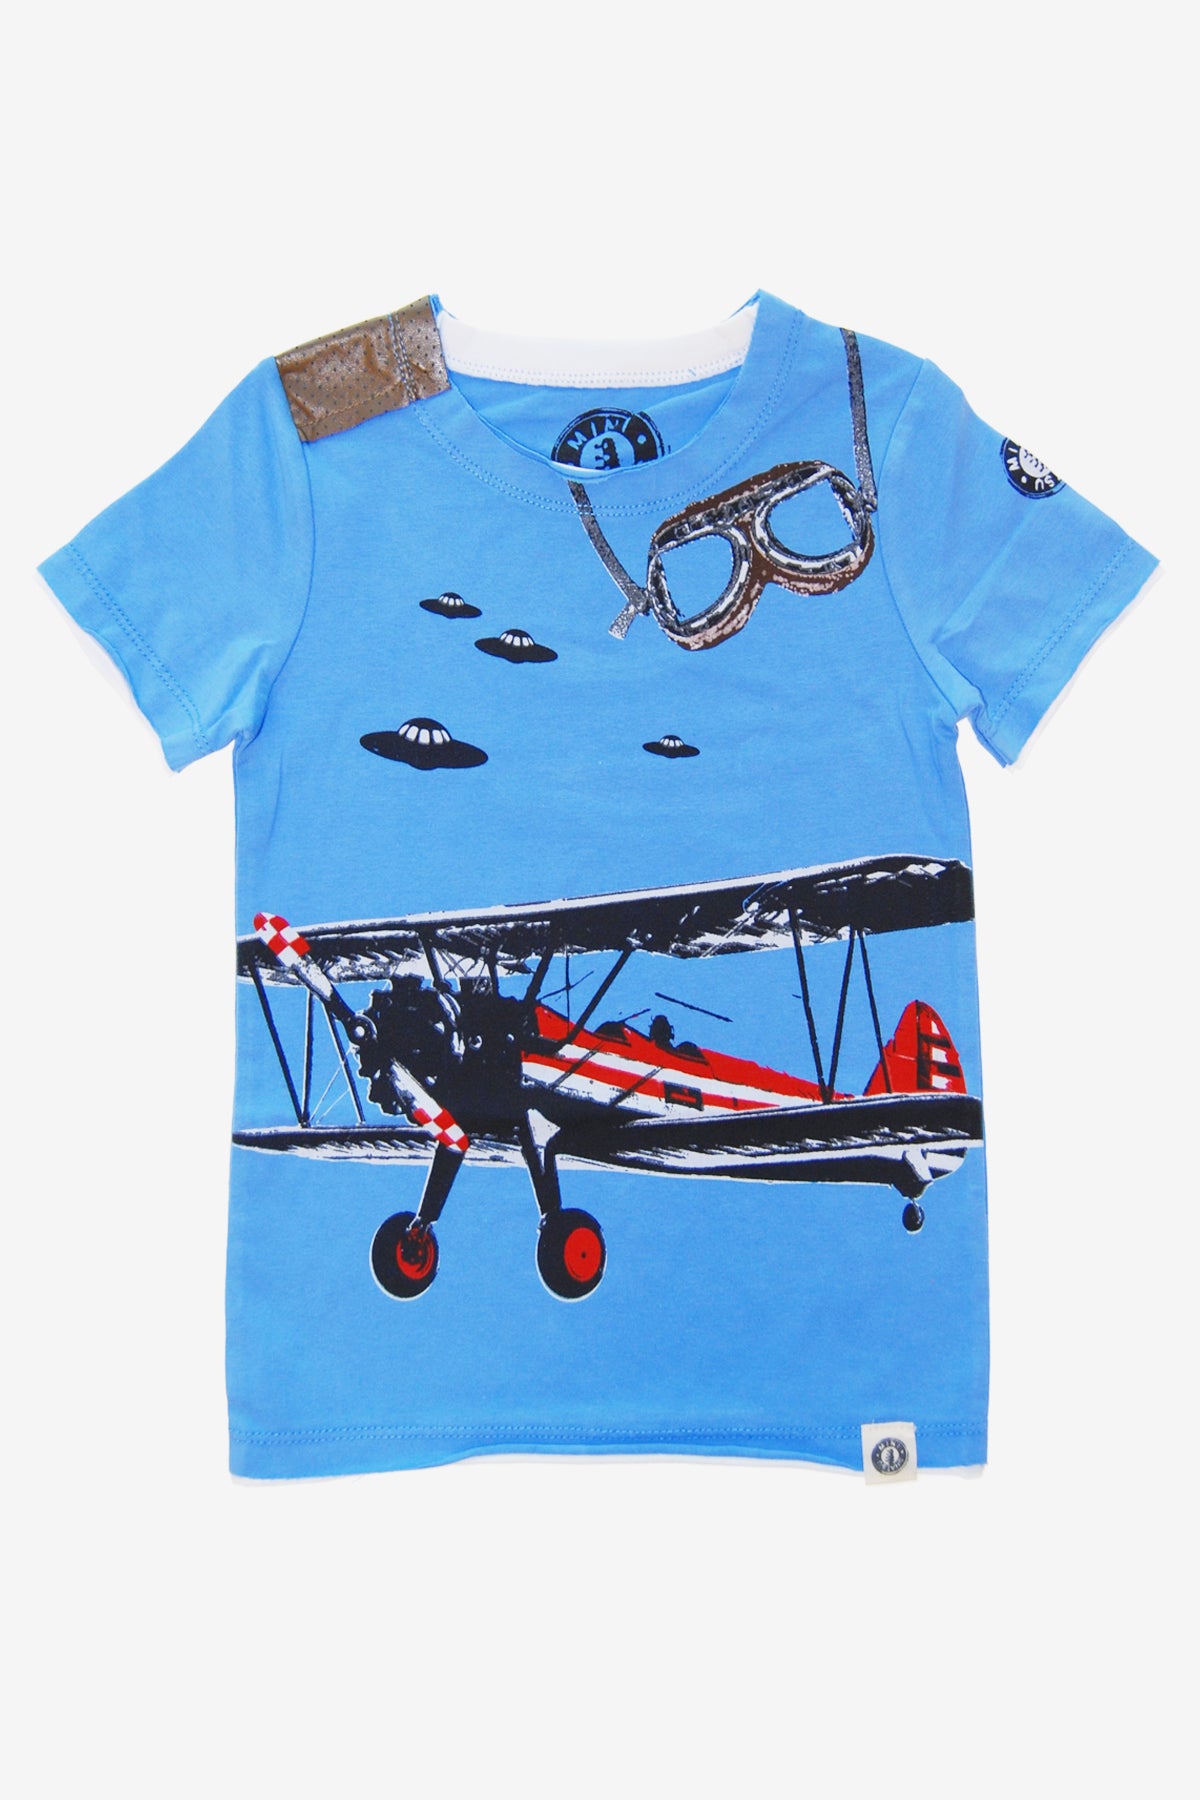 Mini Shatsu Vintage Airplane Boys T-Shirt (Size 8 left) – Mini Ruby